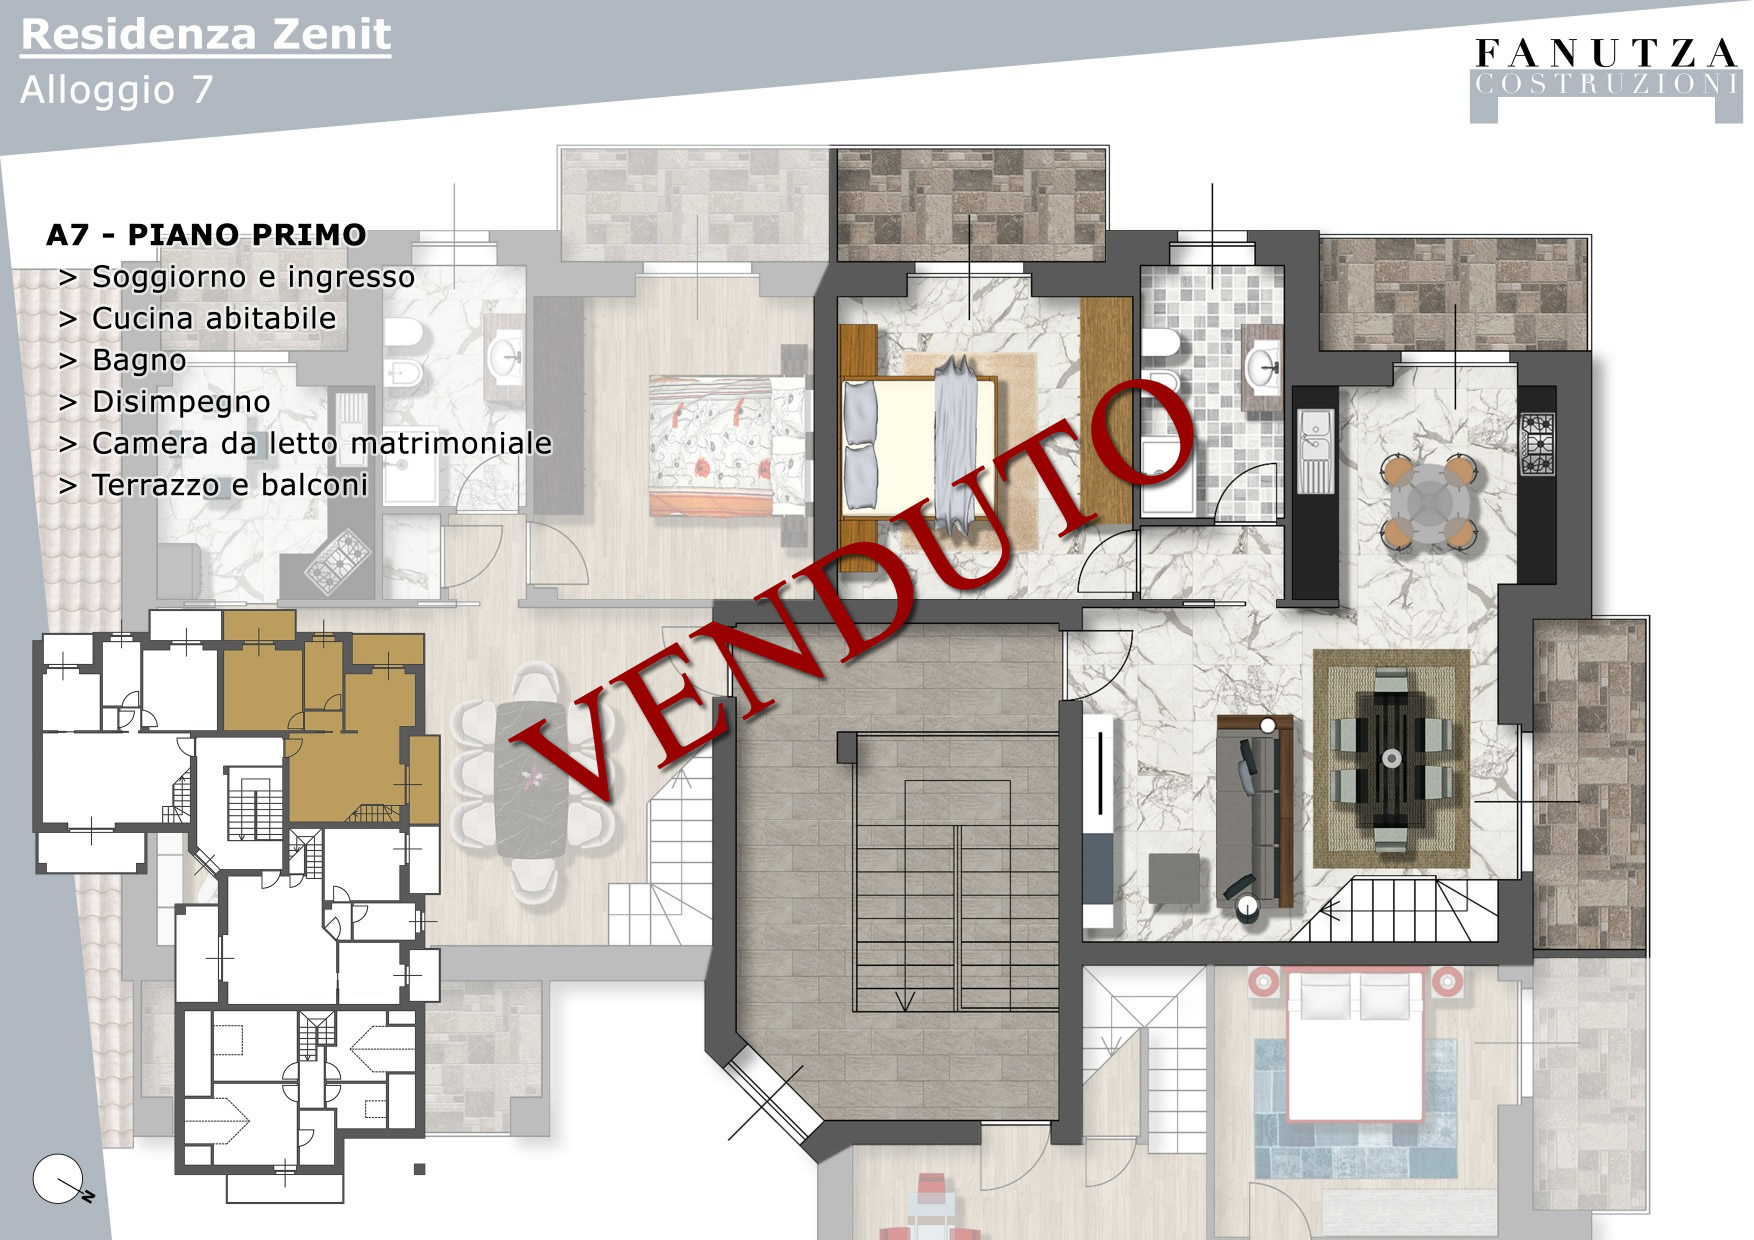 Residenza Zenith